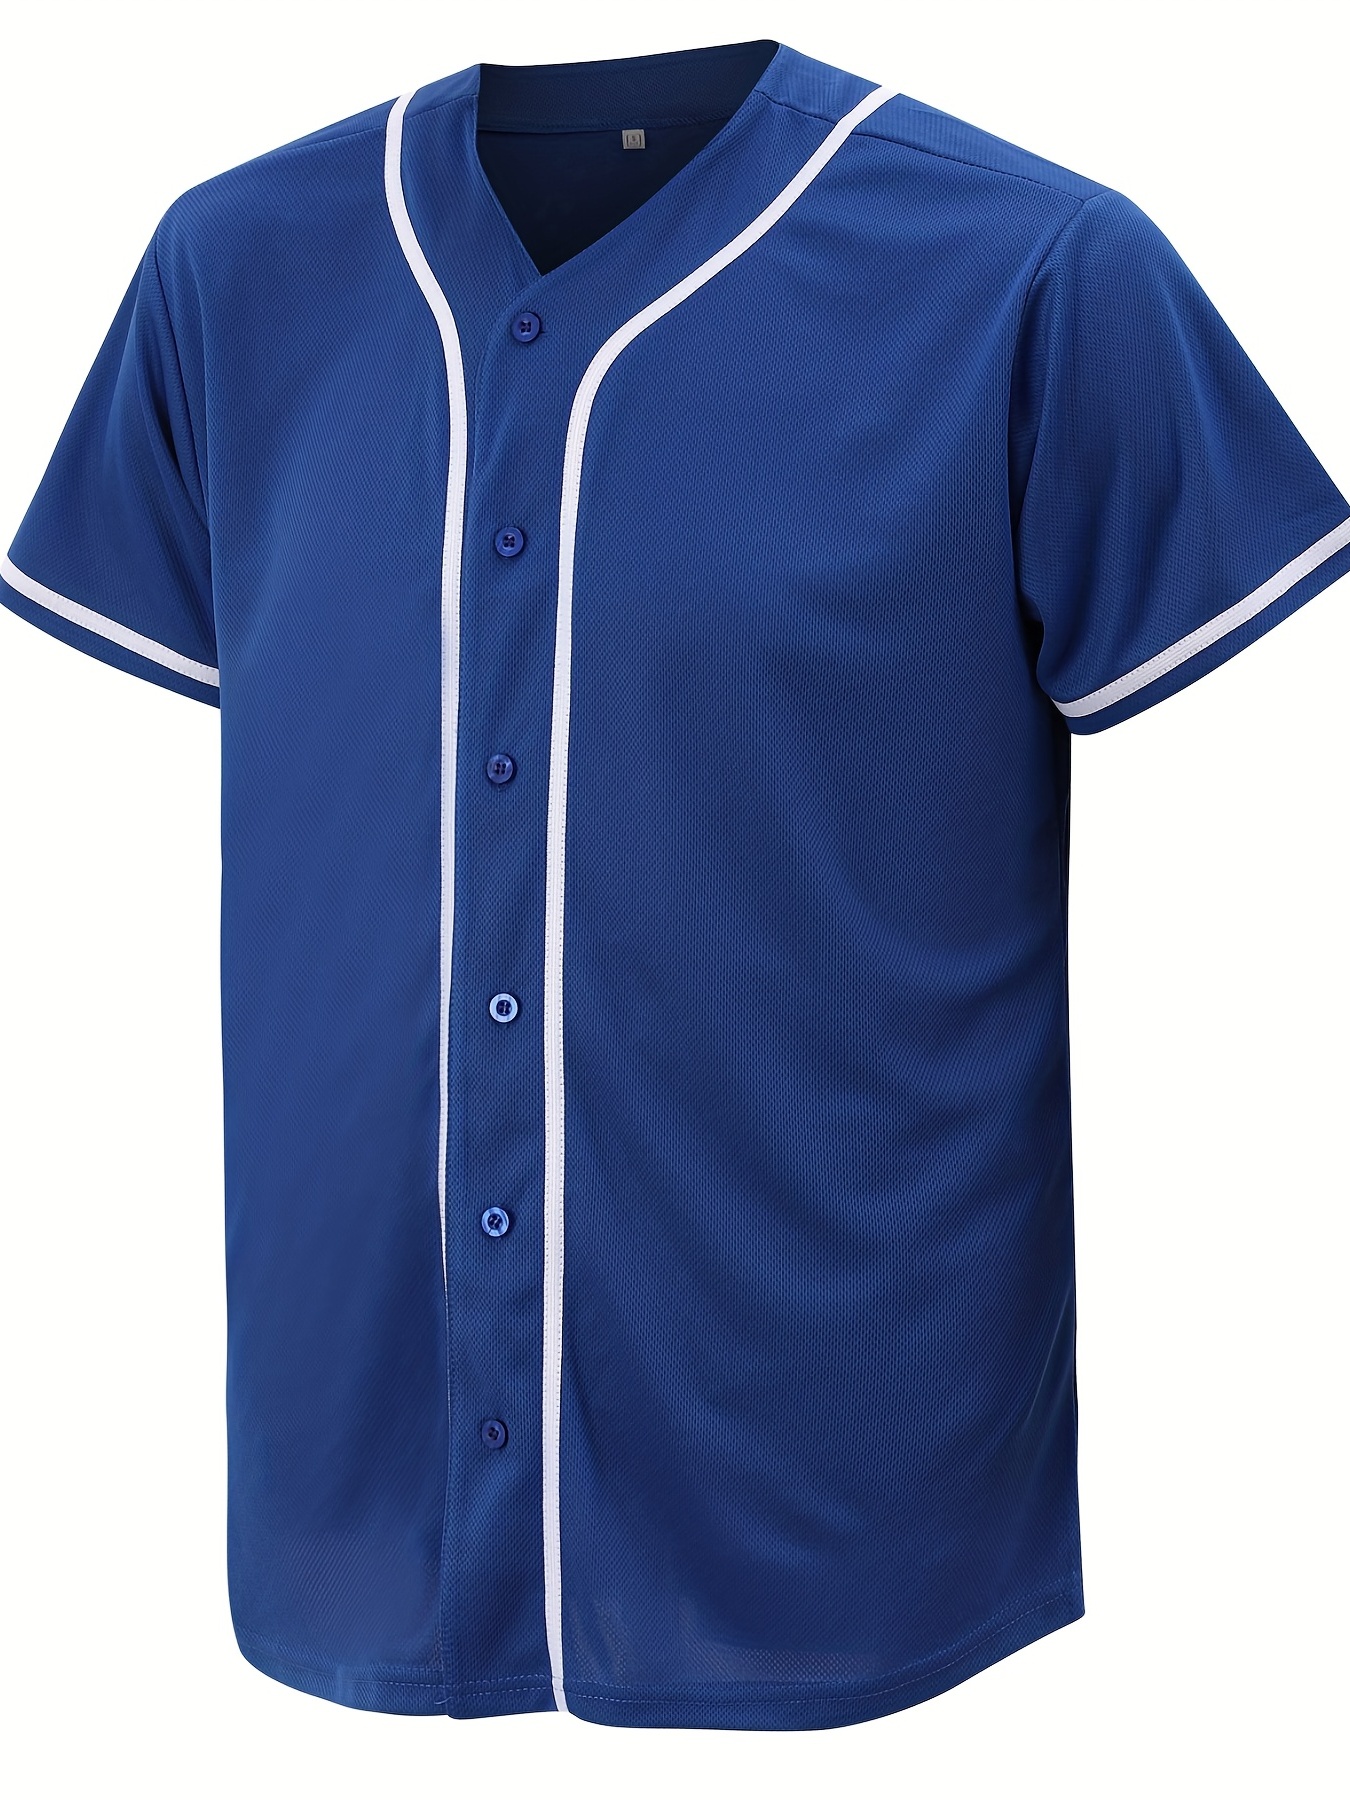 Baseball jersey plain